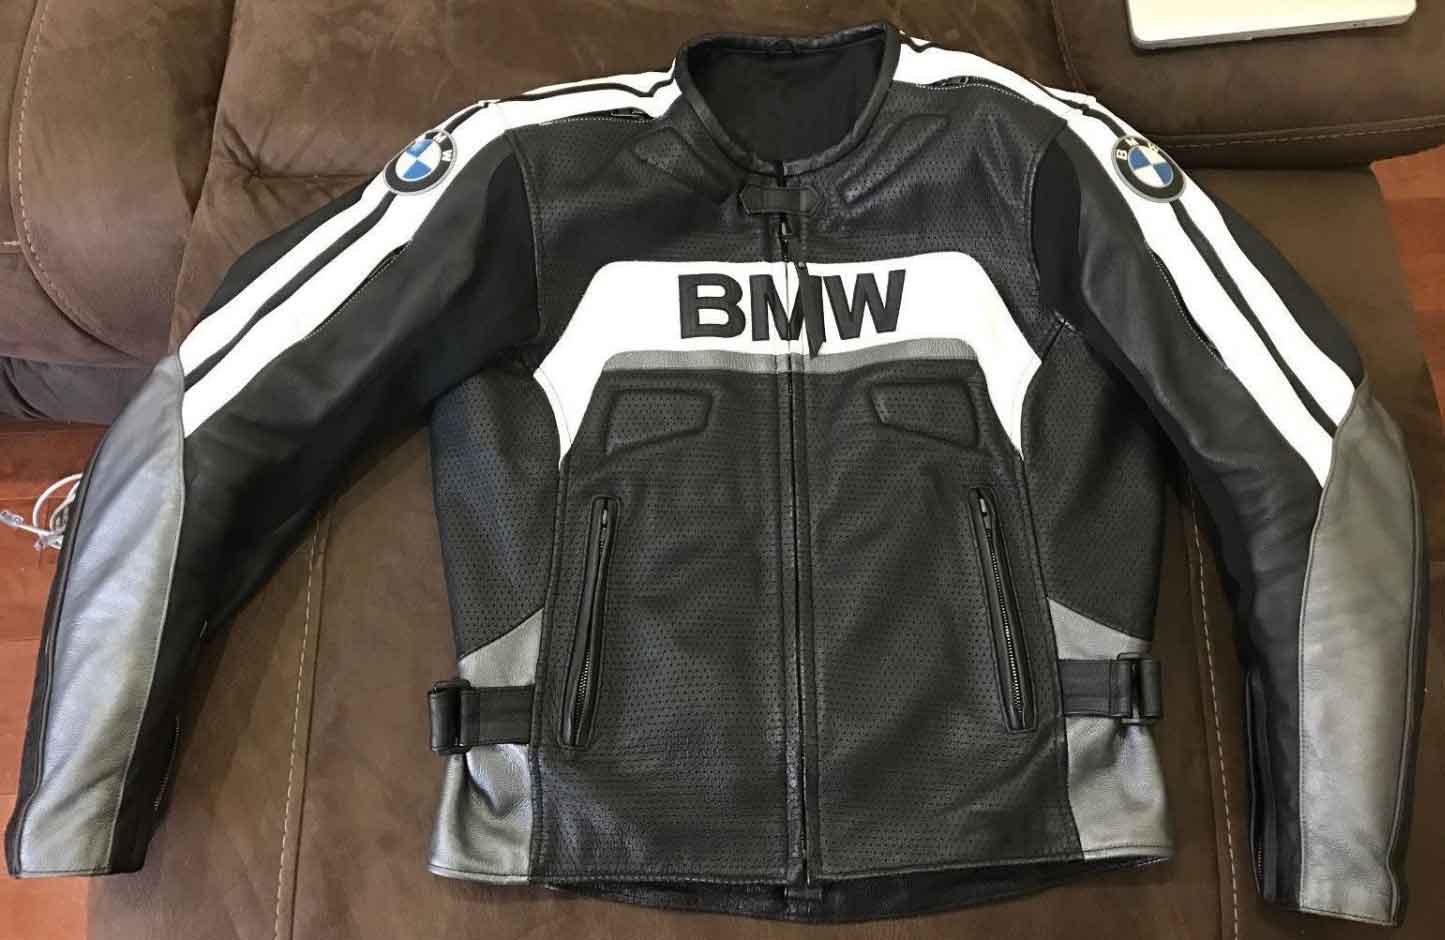 BMW Motorcycle Black And White Leather Jacket - Maker of Jacket